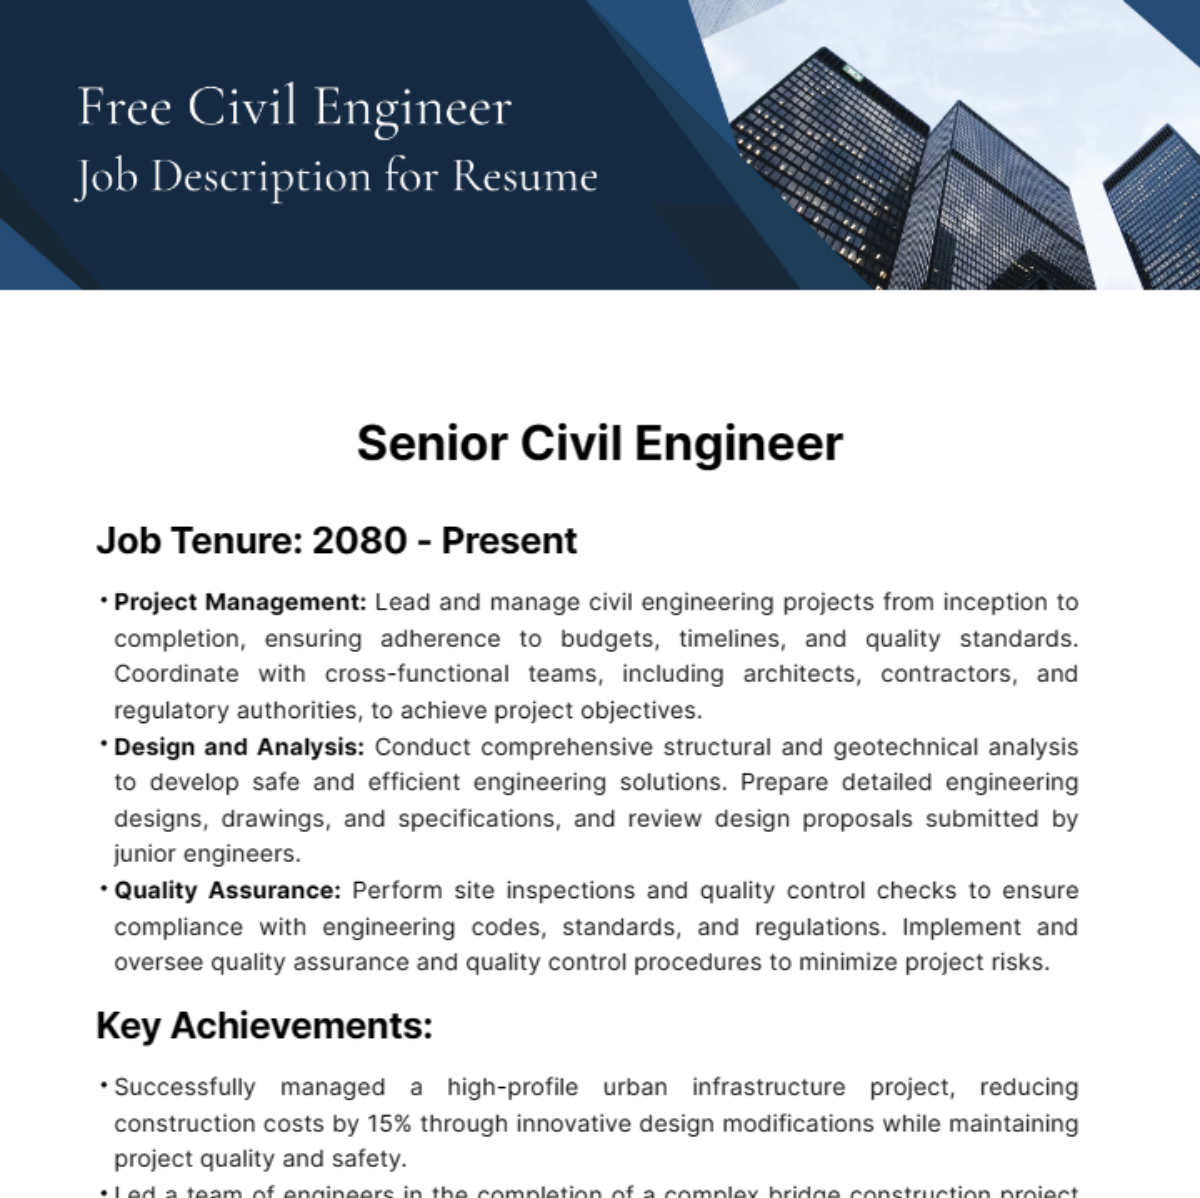 Free Civil Engineer Job Description for Resume Template